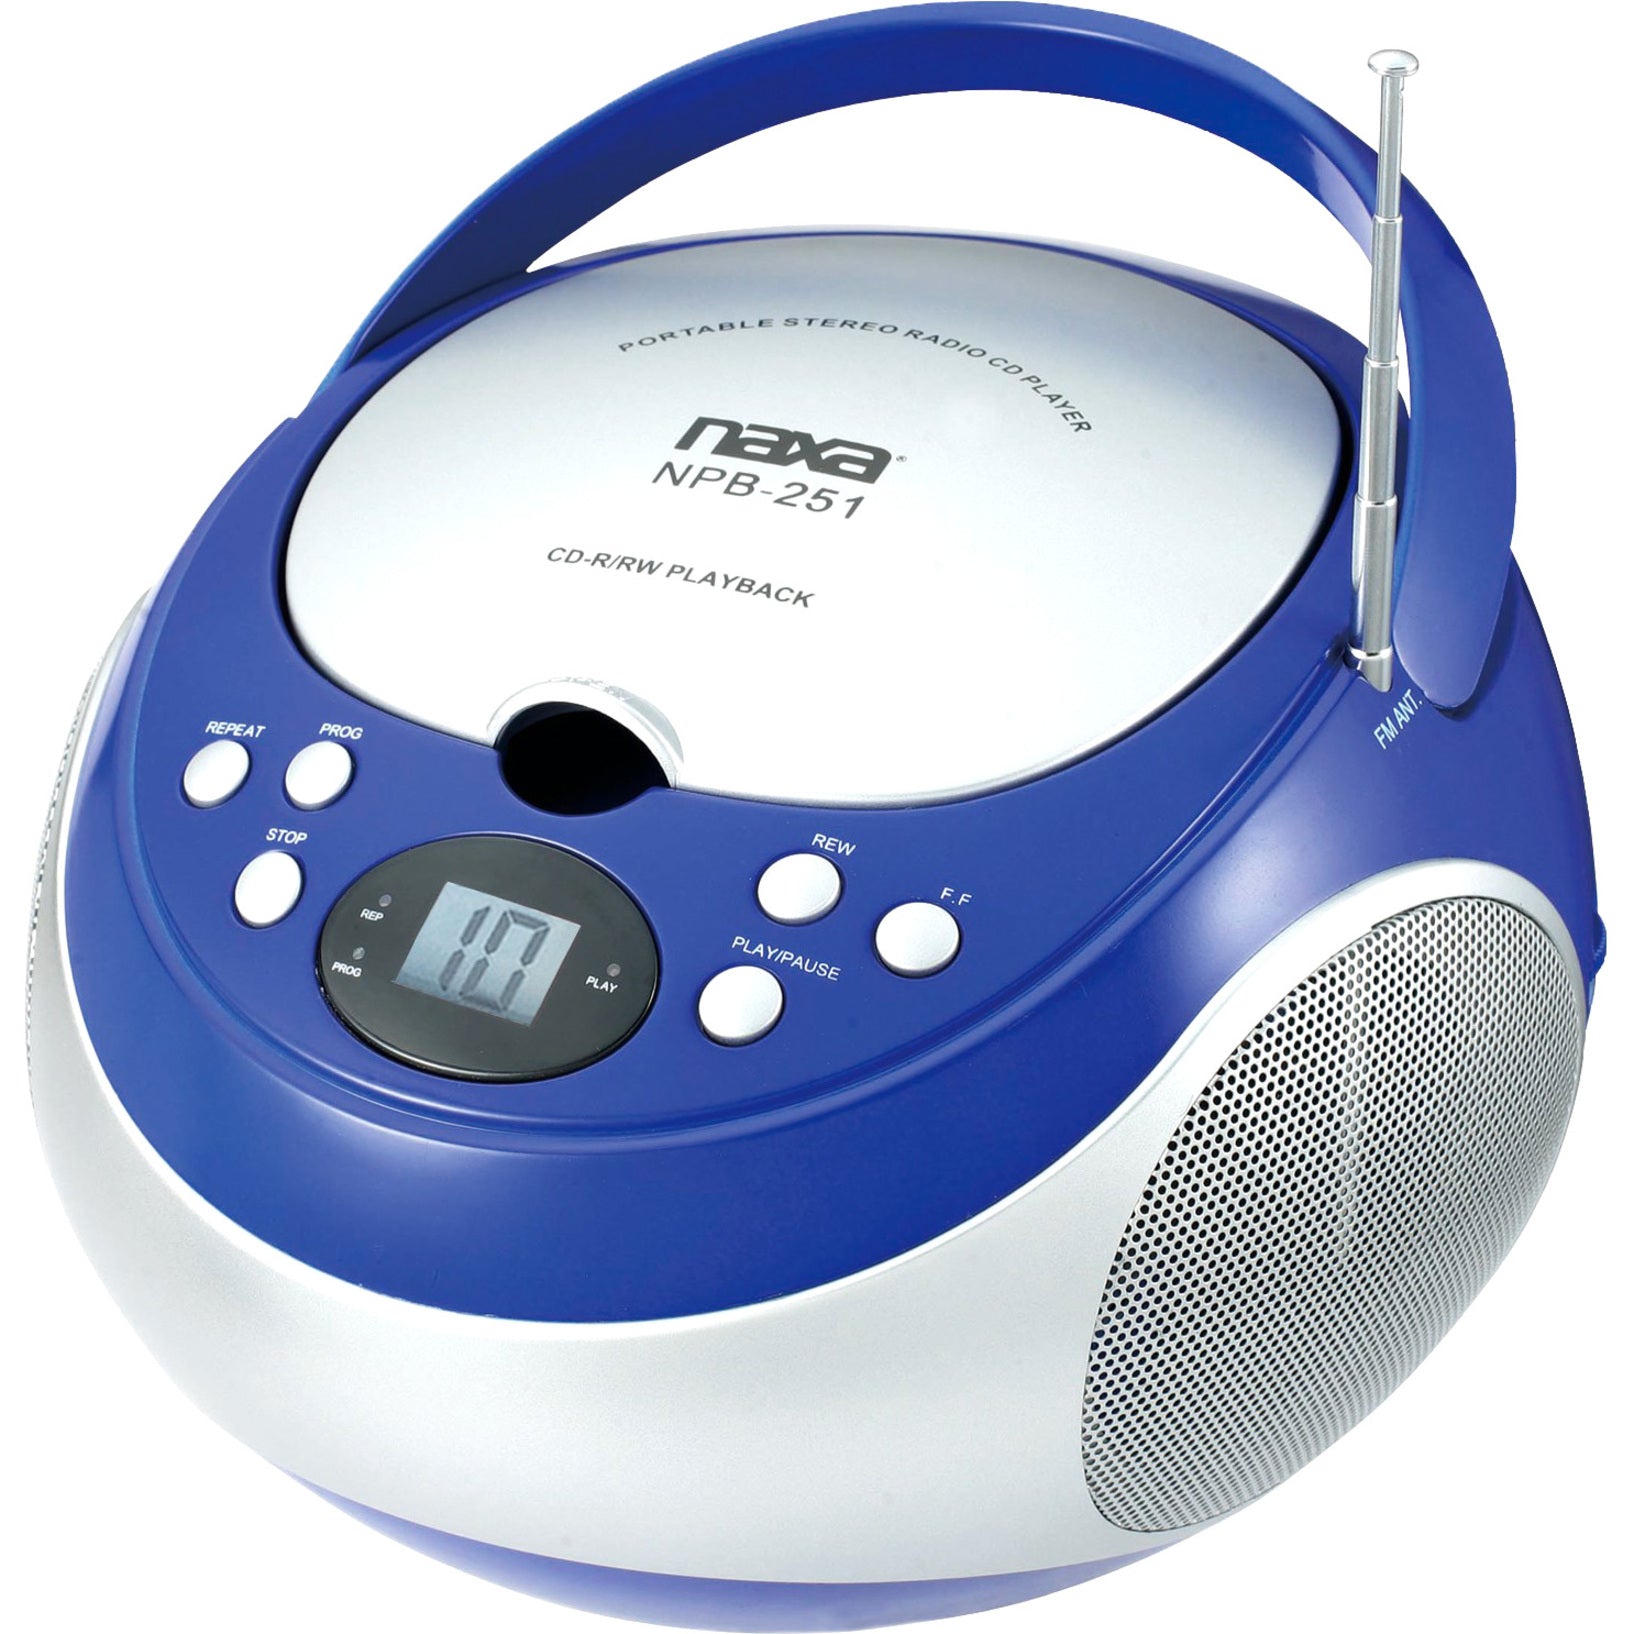 Naxa NPB251BL Portable CD Player with AM/FM Stereo Radio, Blue - Telescopic Antenna, LED Screen, 1 Year Warranty